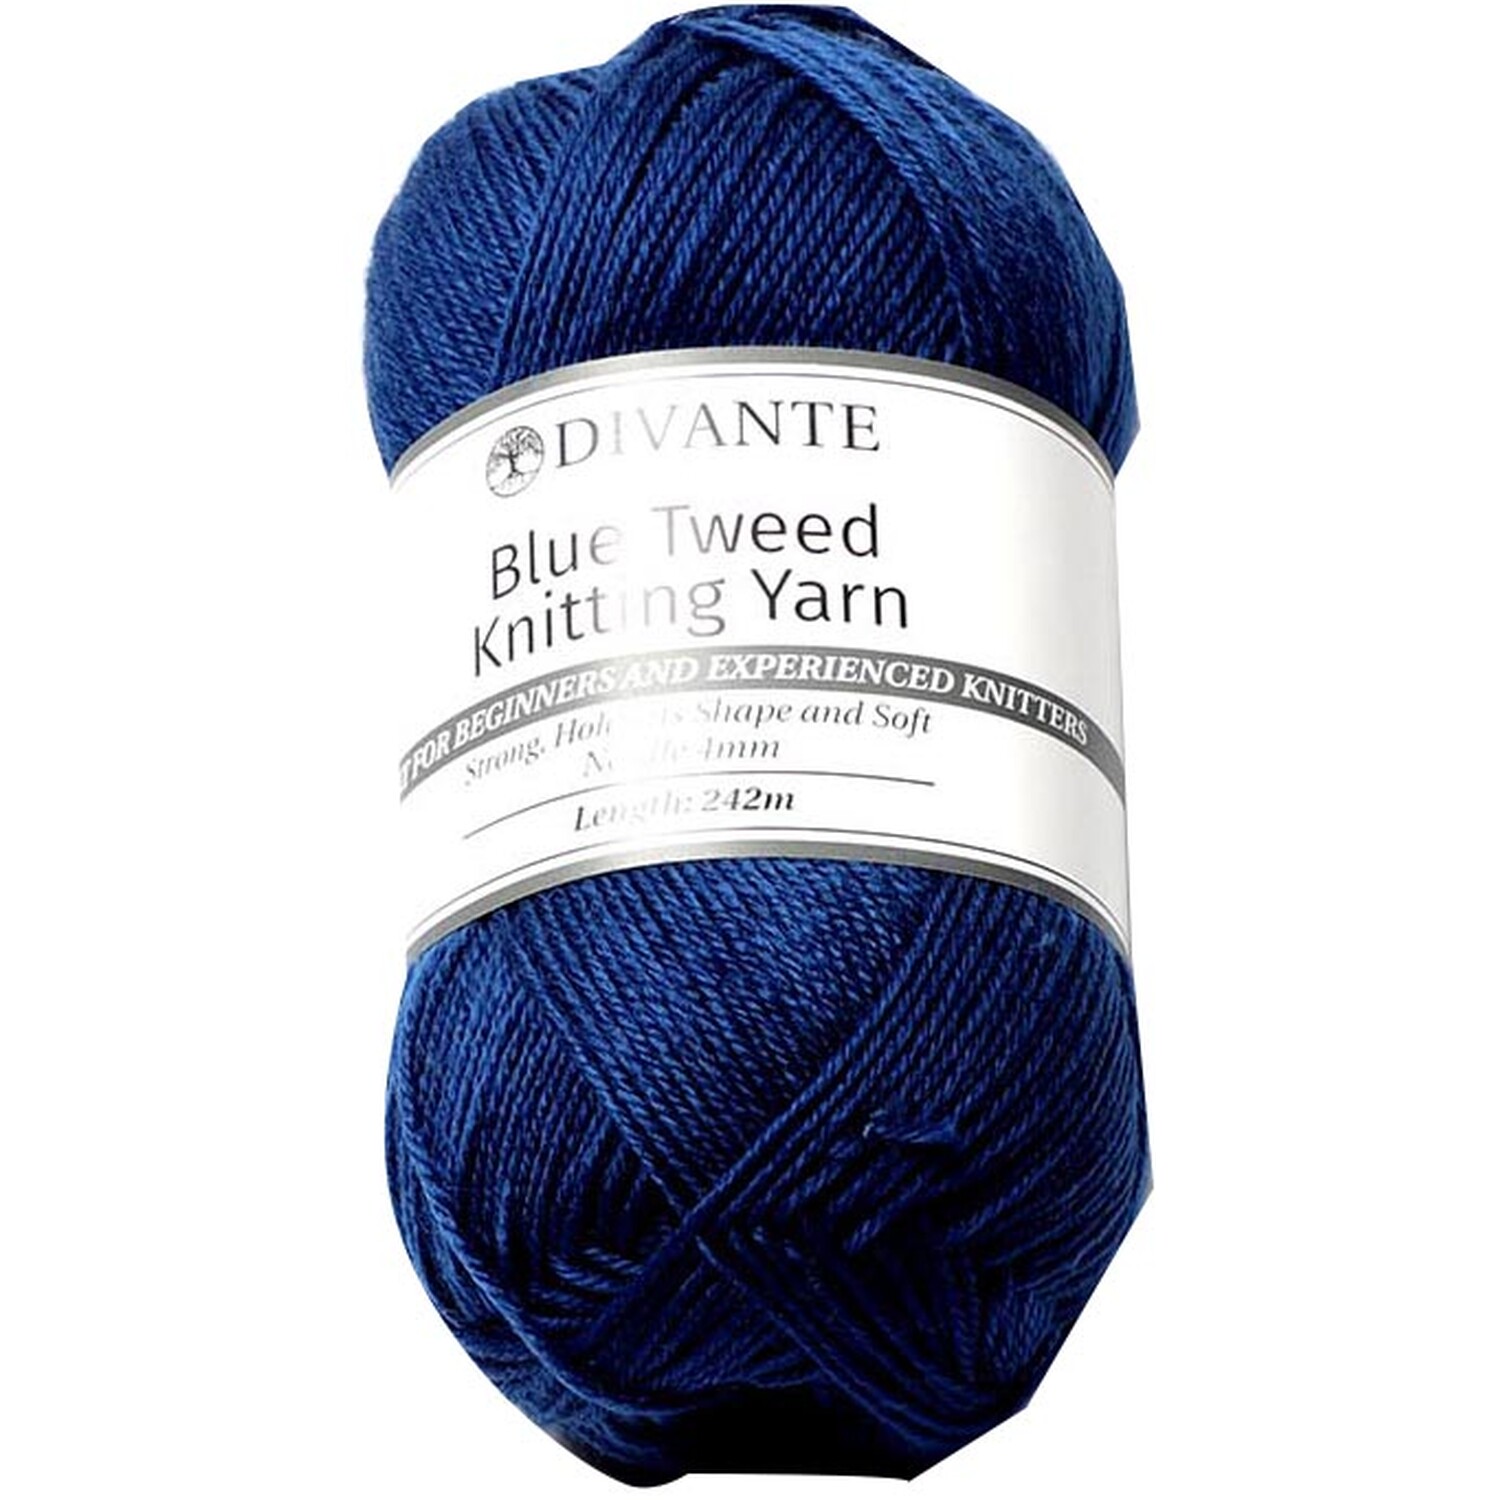 Divante Basic Knitting Yarn - Blue Tweed Image